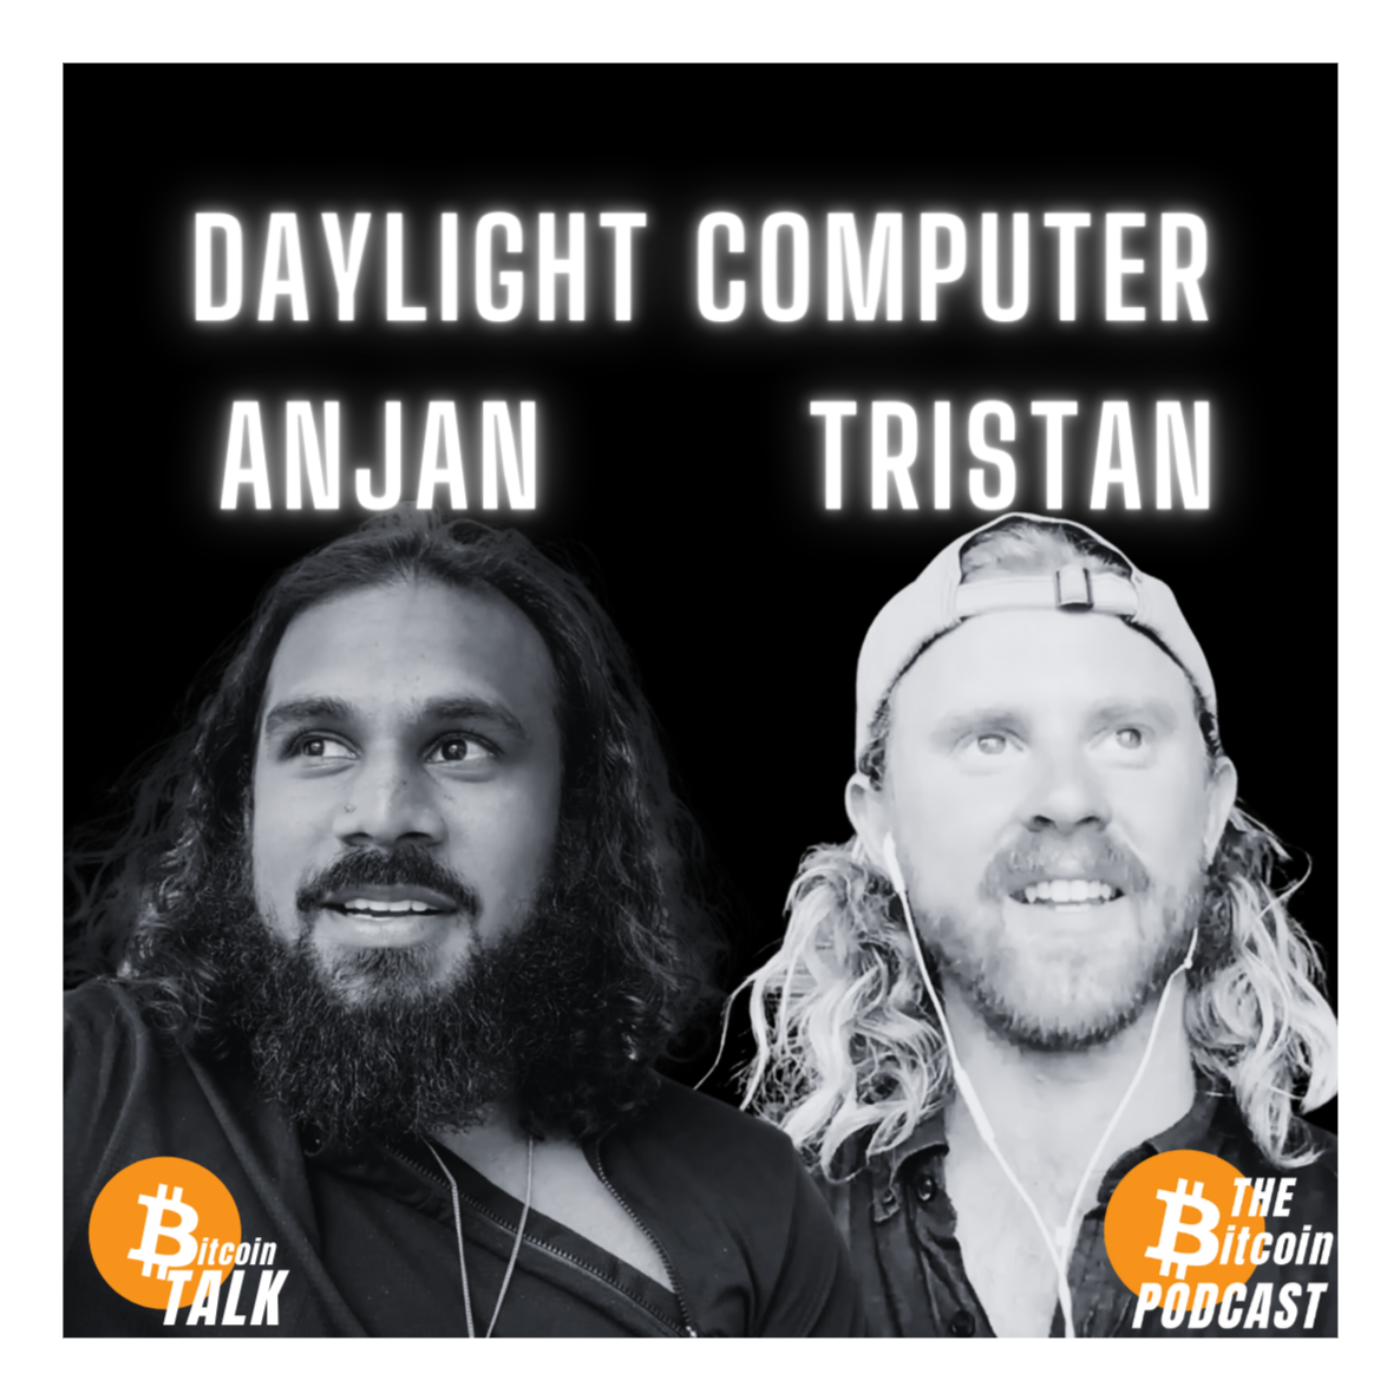 Technological Sovereignty & Daylight Computer: Anjan & Tristan (Bitcoin Talk on THE Bitcoin Podcast)